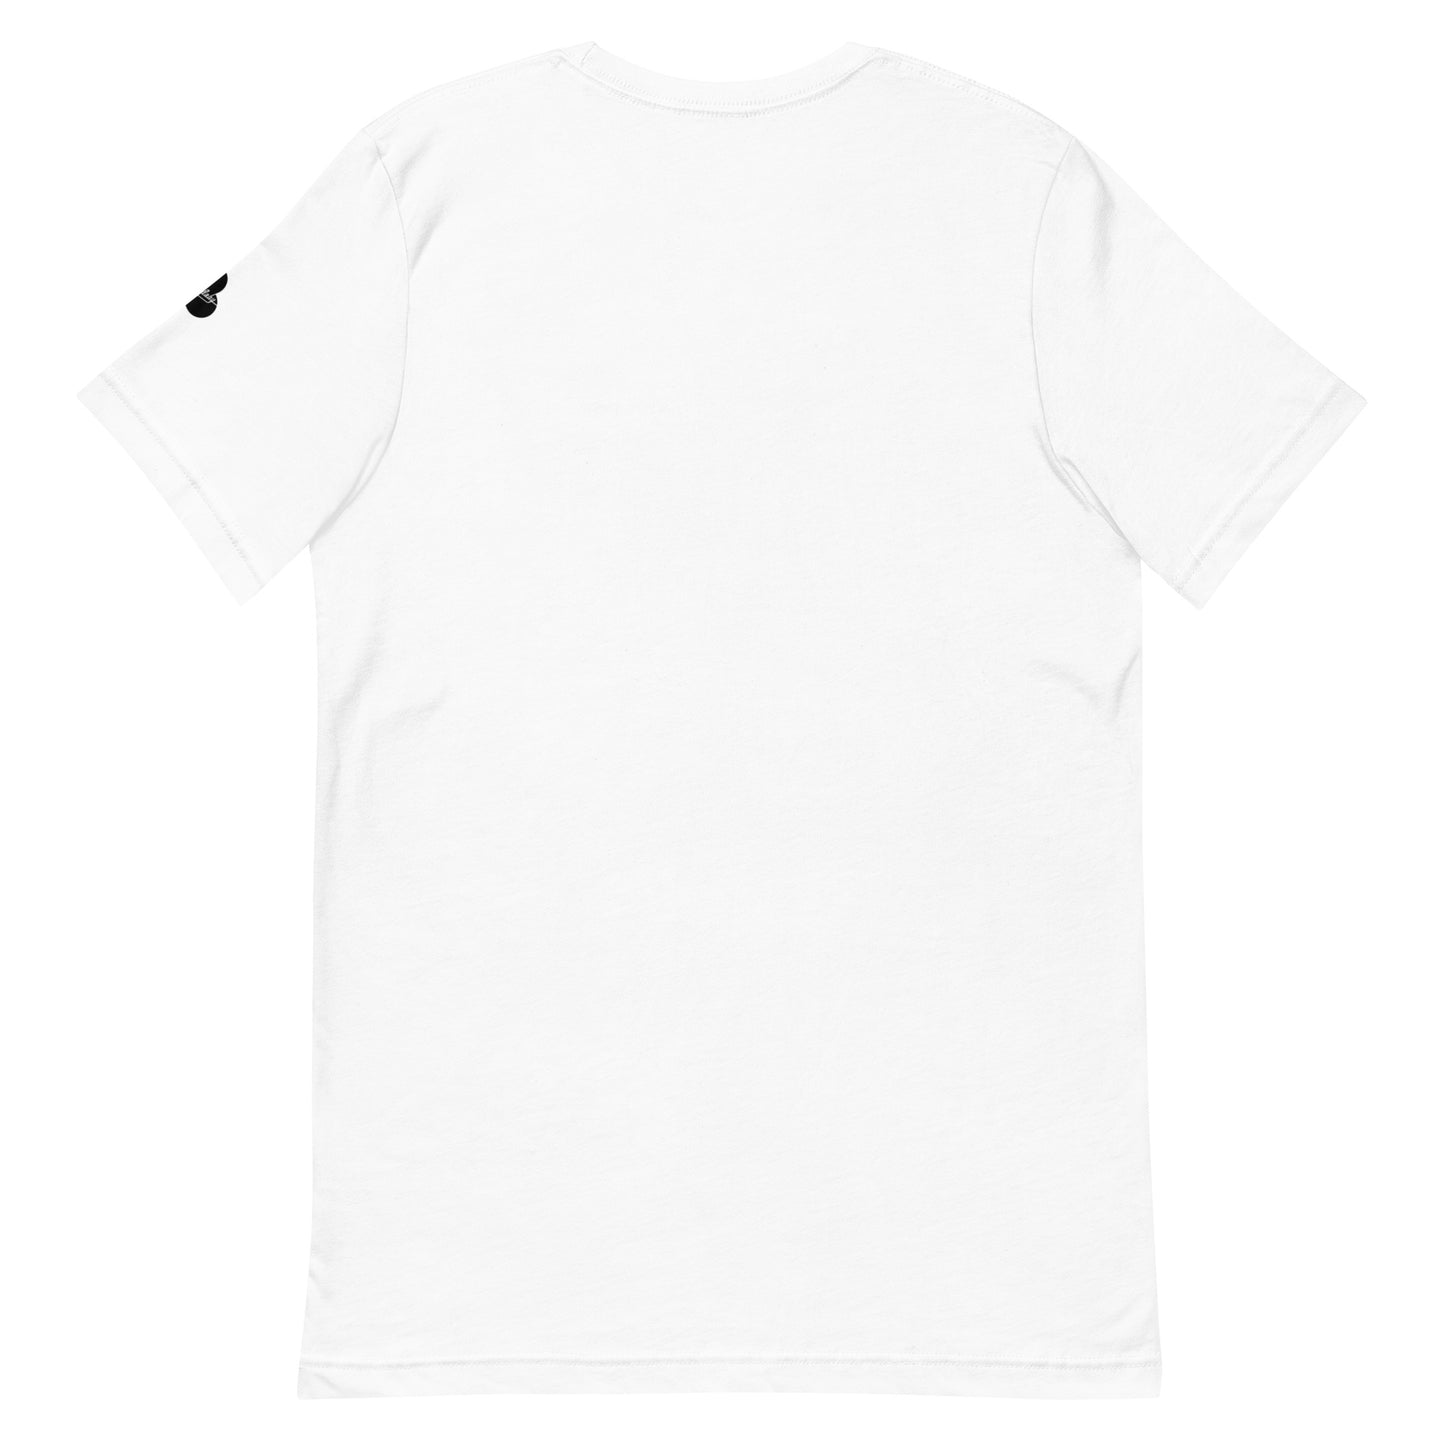 LondonBaby Rascal Rosaline (Punked) T-shirt design